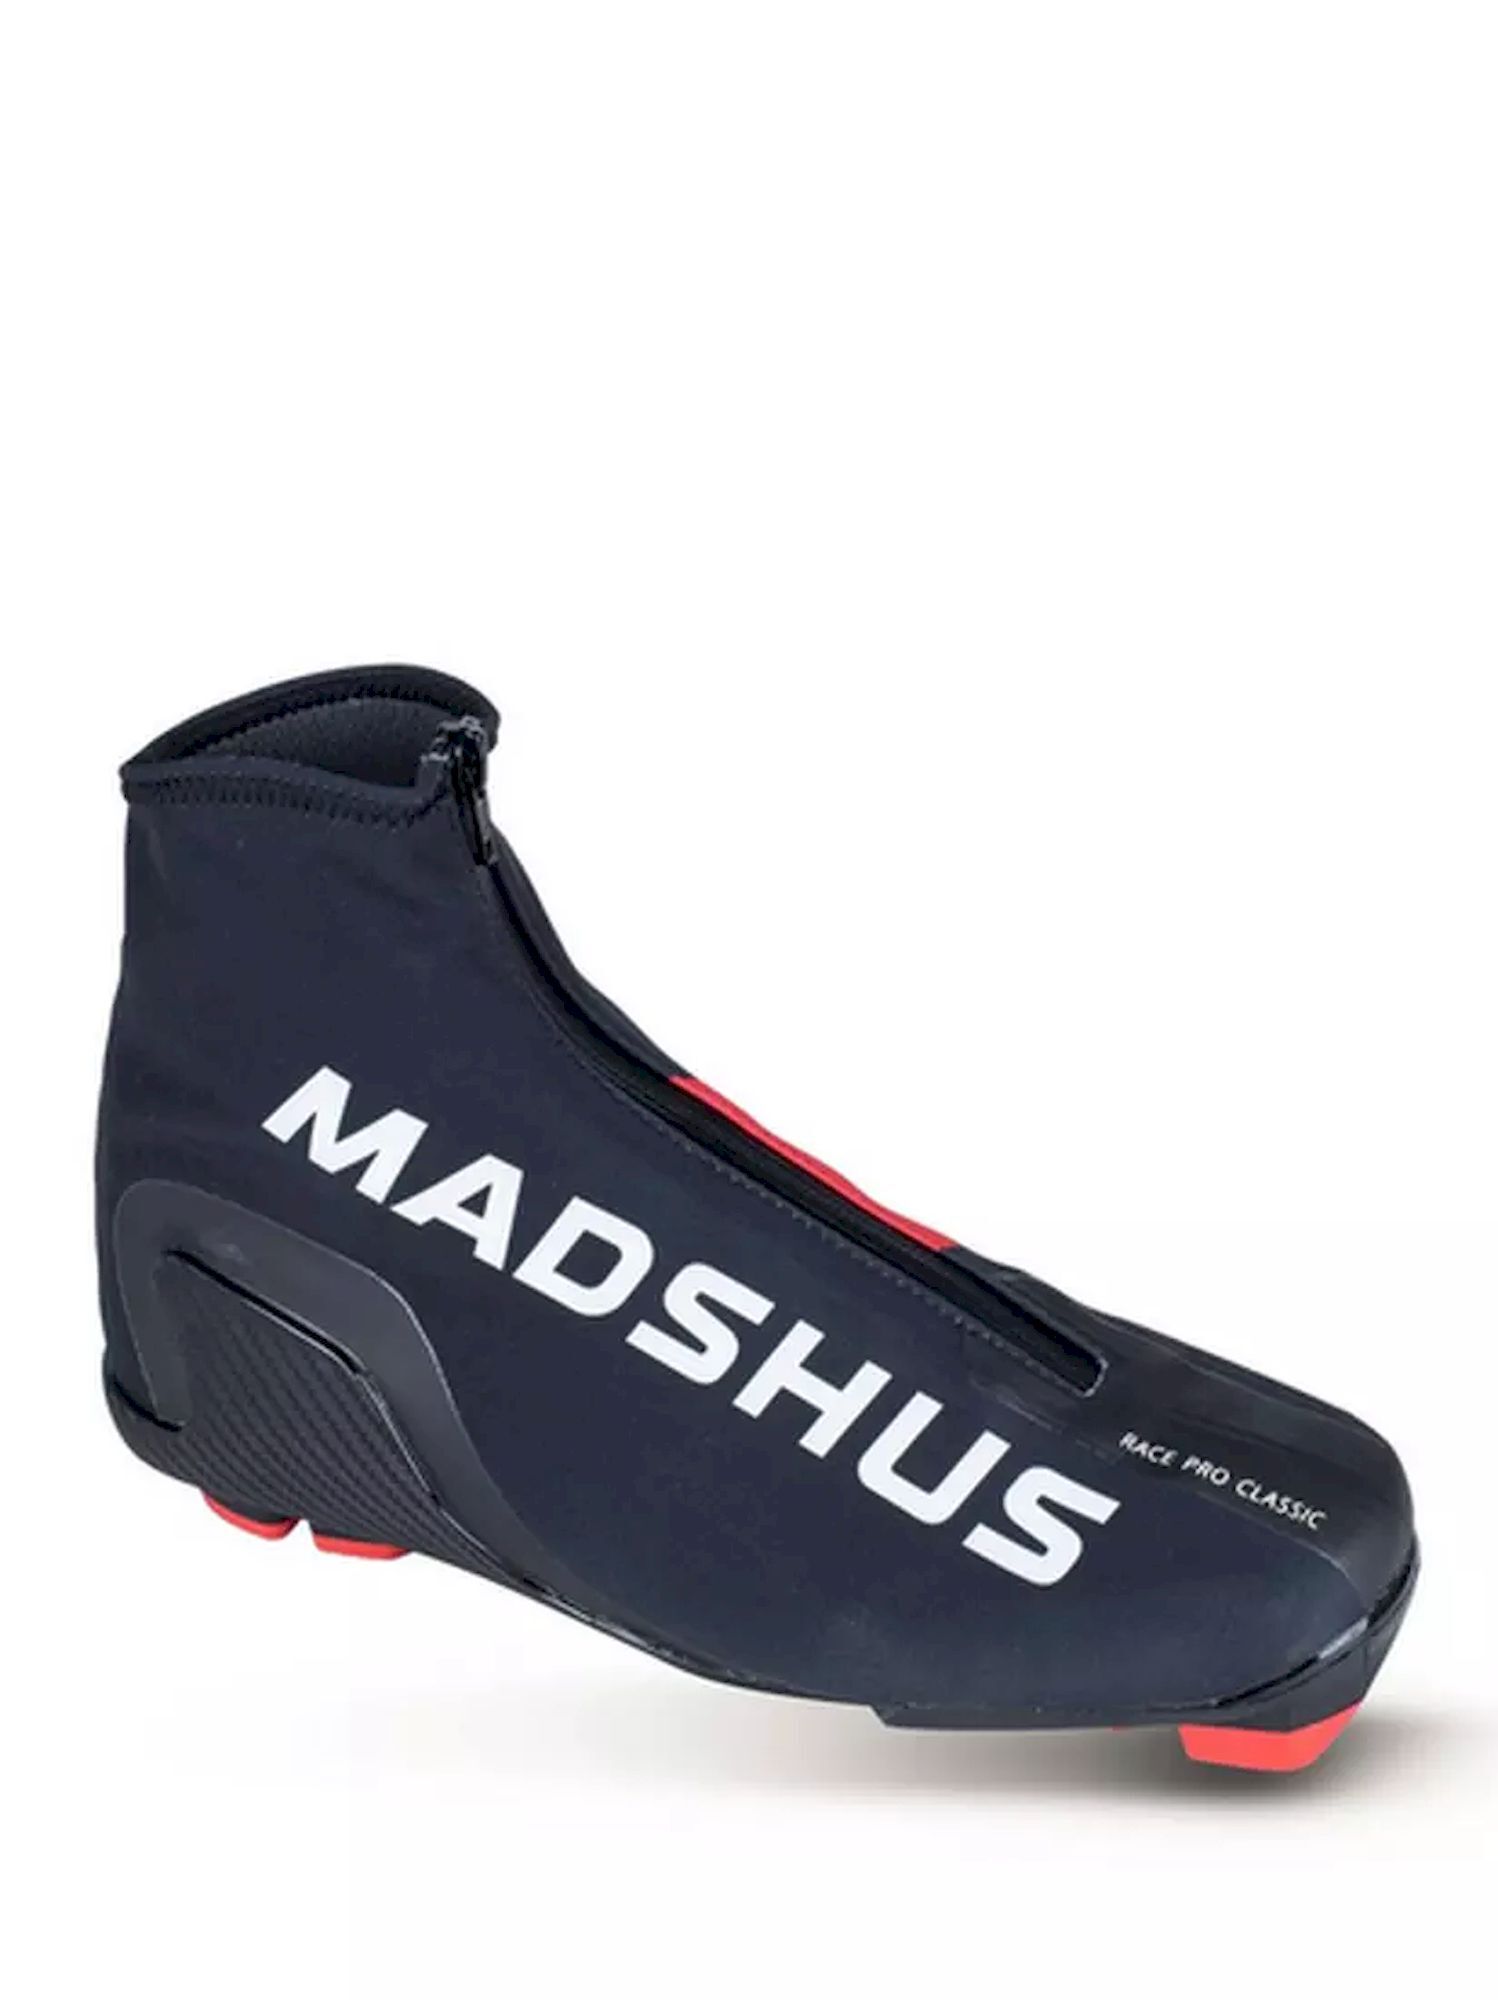 Madshus Race Pro Classic - Hiihtokengät | Hardloop